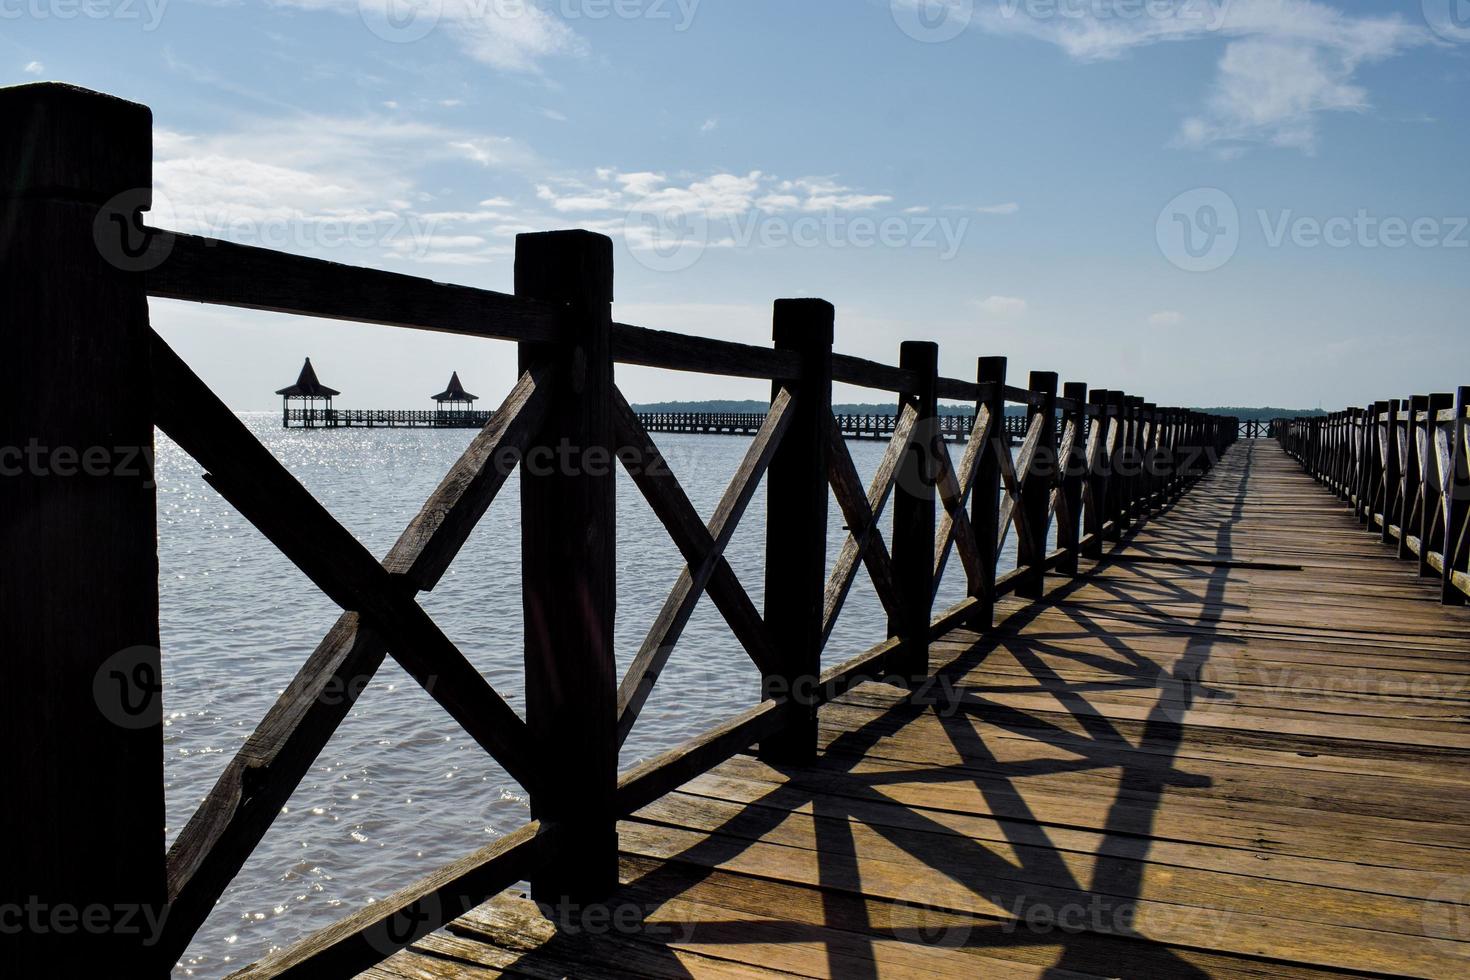 Beautiful old wooden pier bridge photo